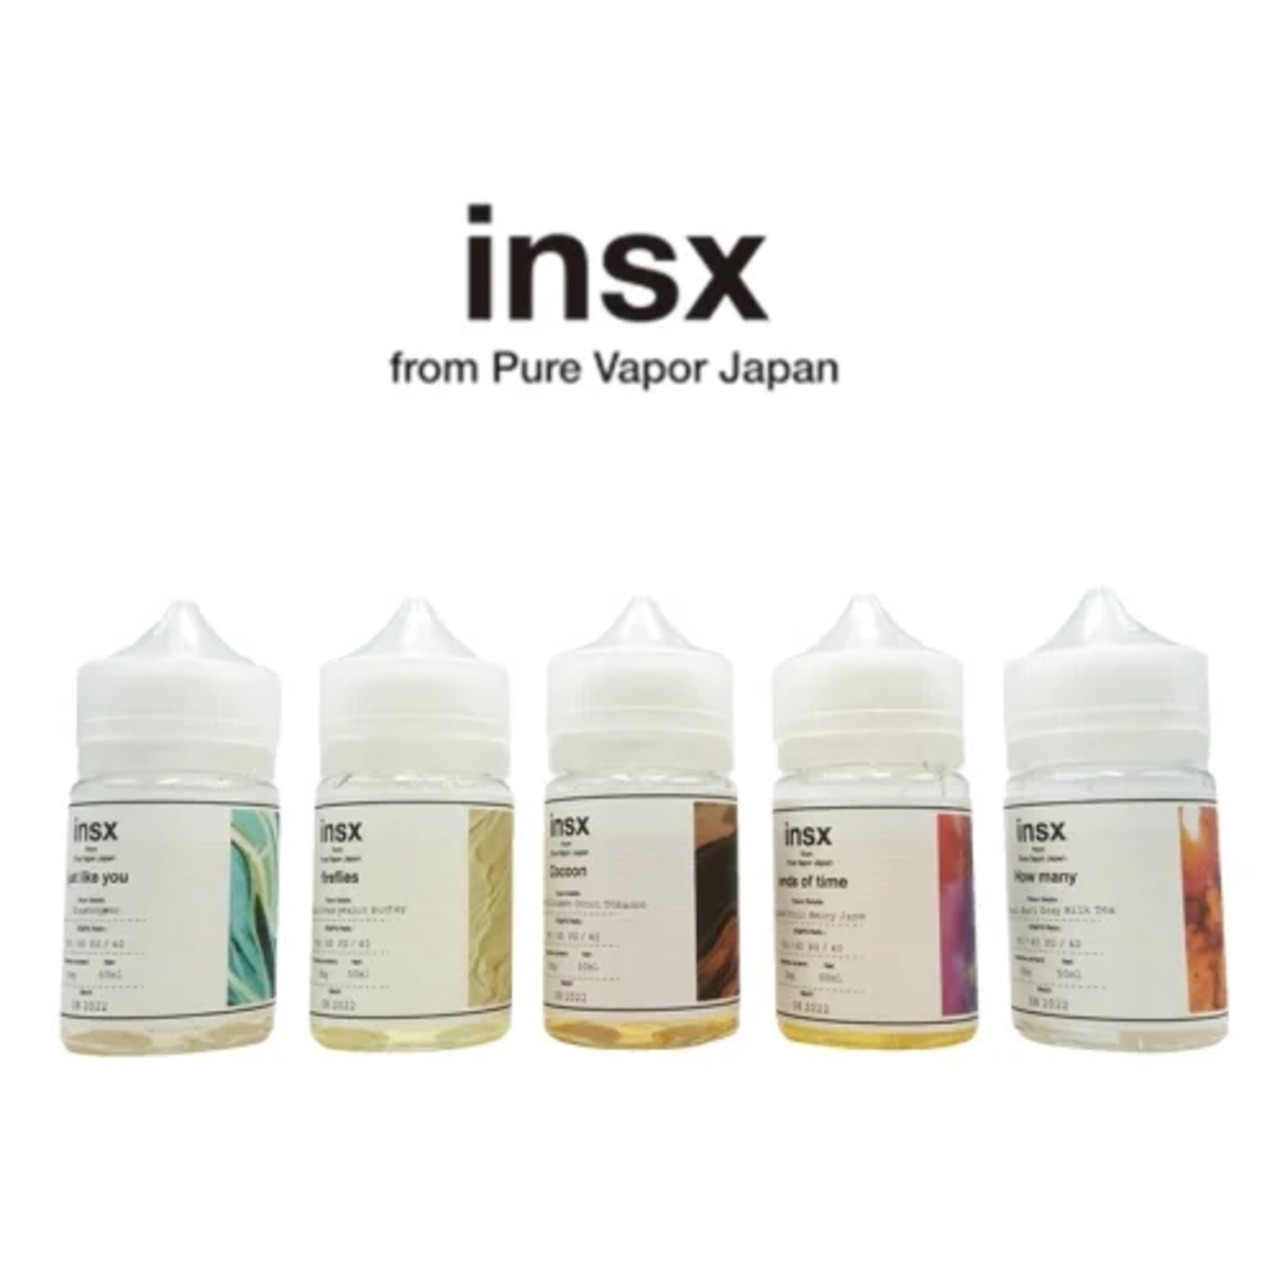 insx from Pure Vapor Japan 50ml